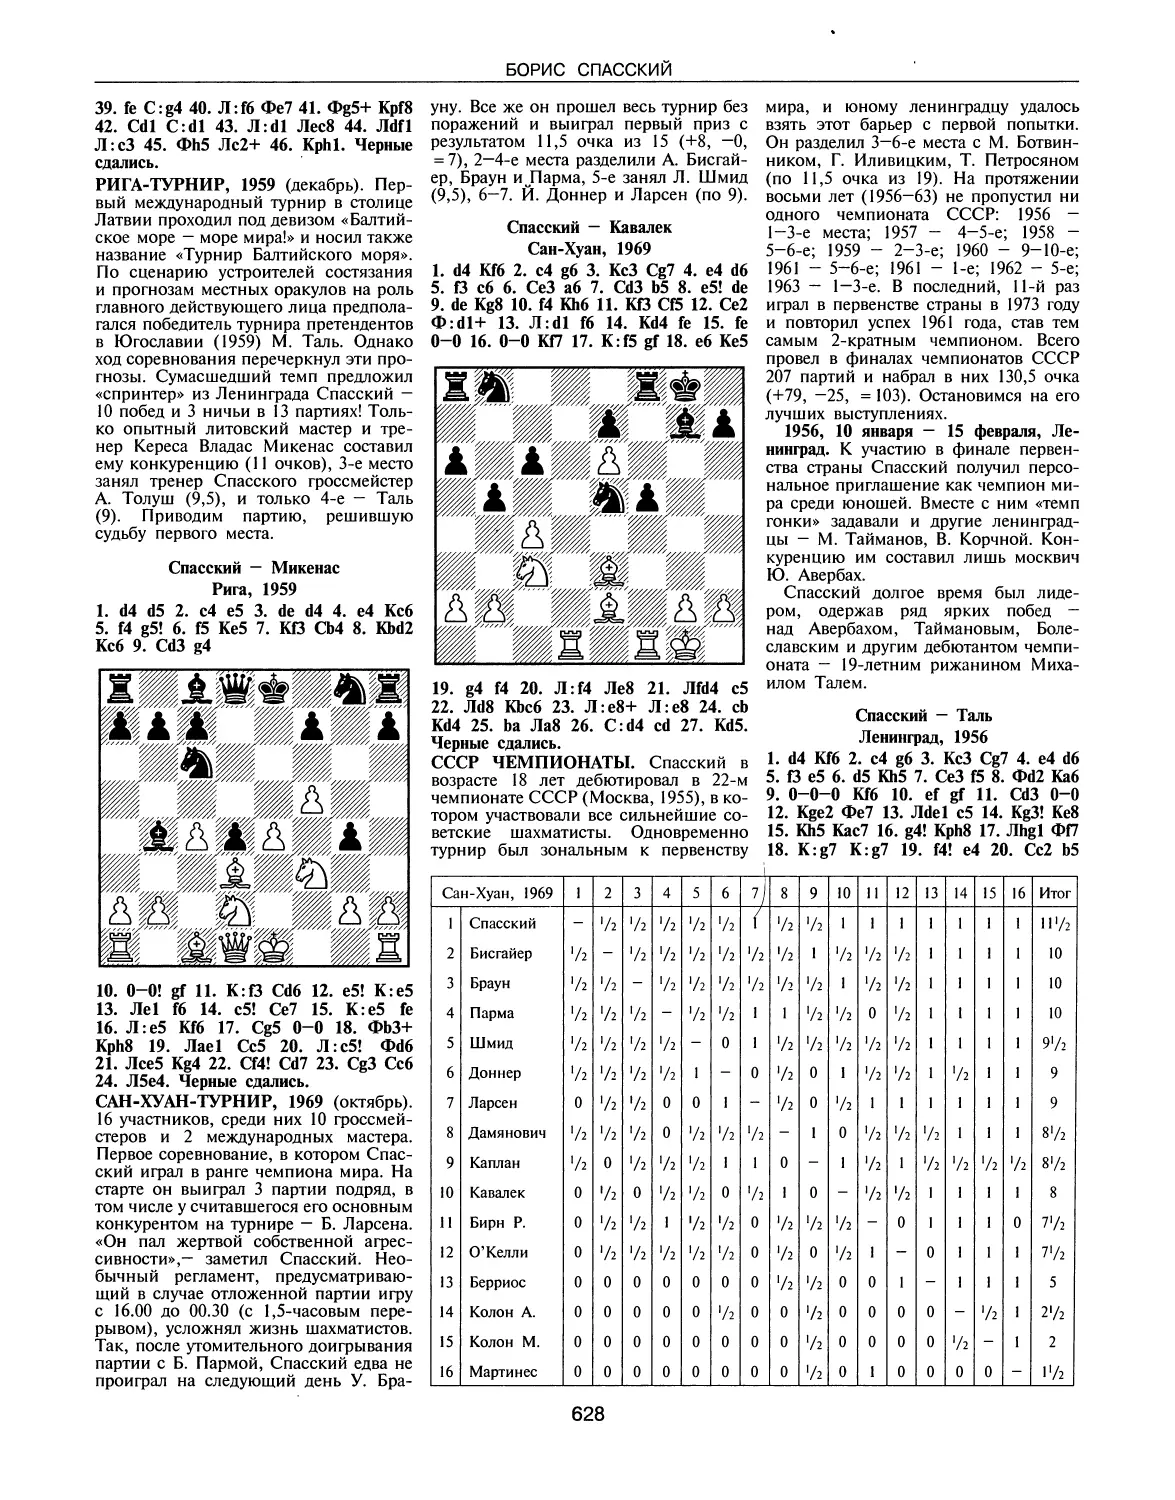 Рига-турнир, 1959
Сан-Хуан-турнир, 1969
СССР чемпионаты